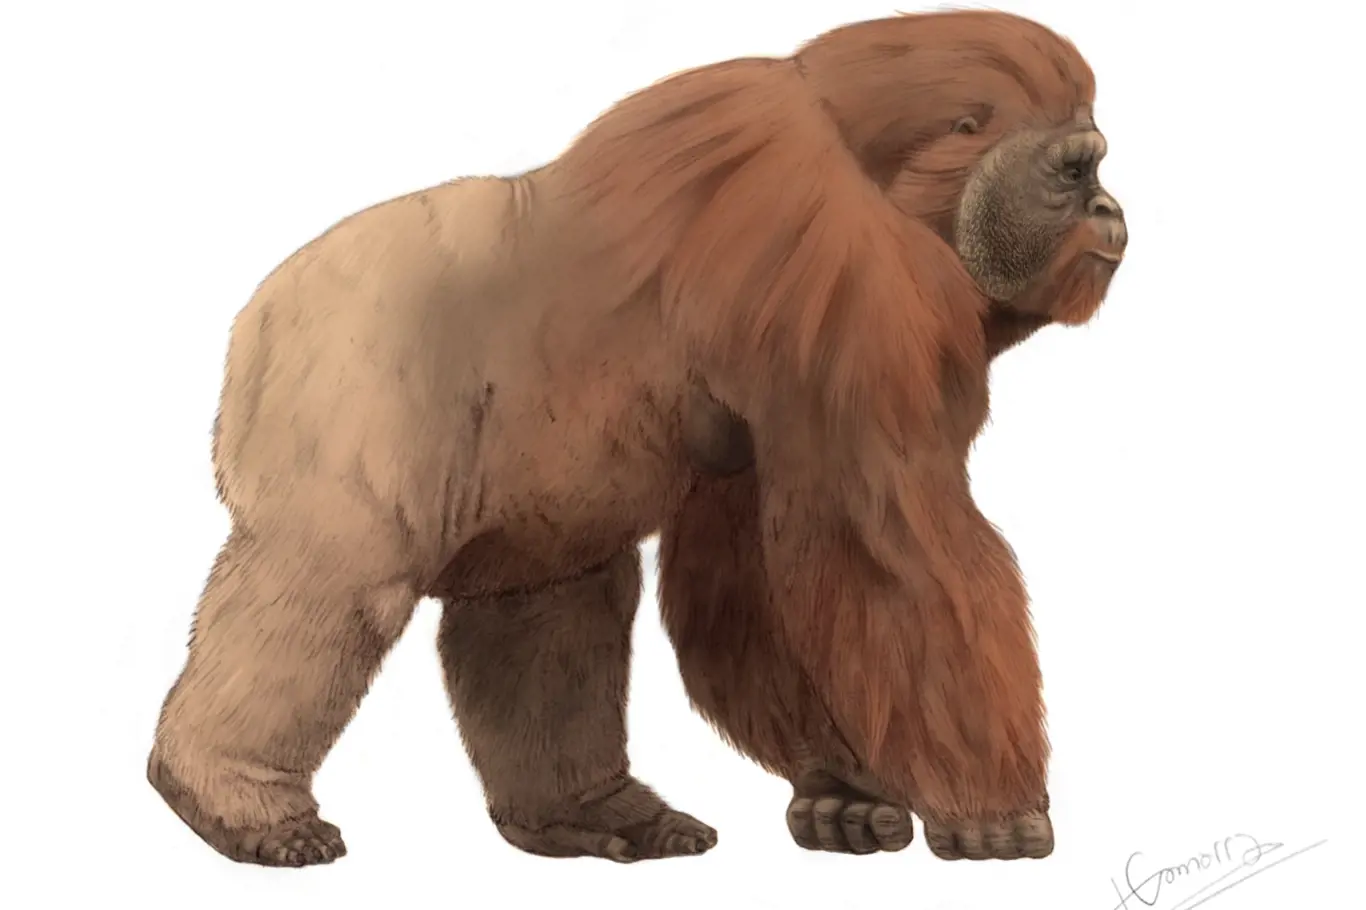 Gigantopithecus